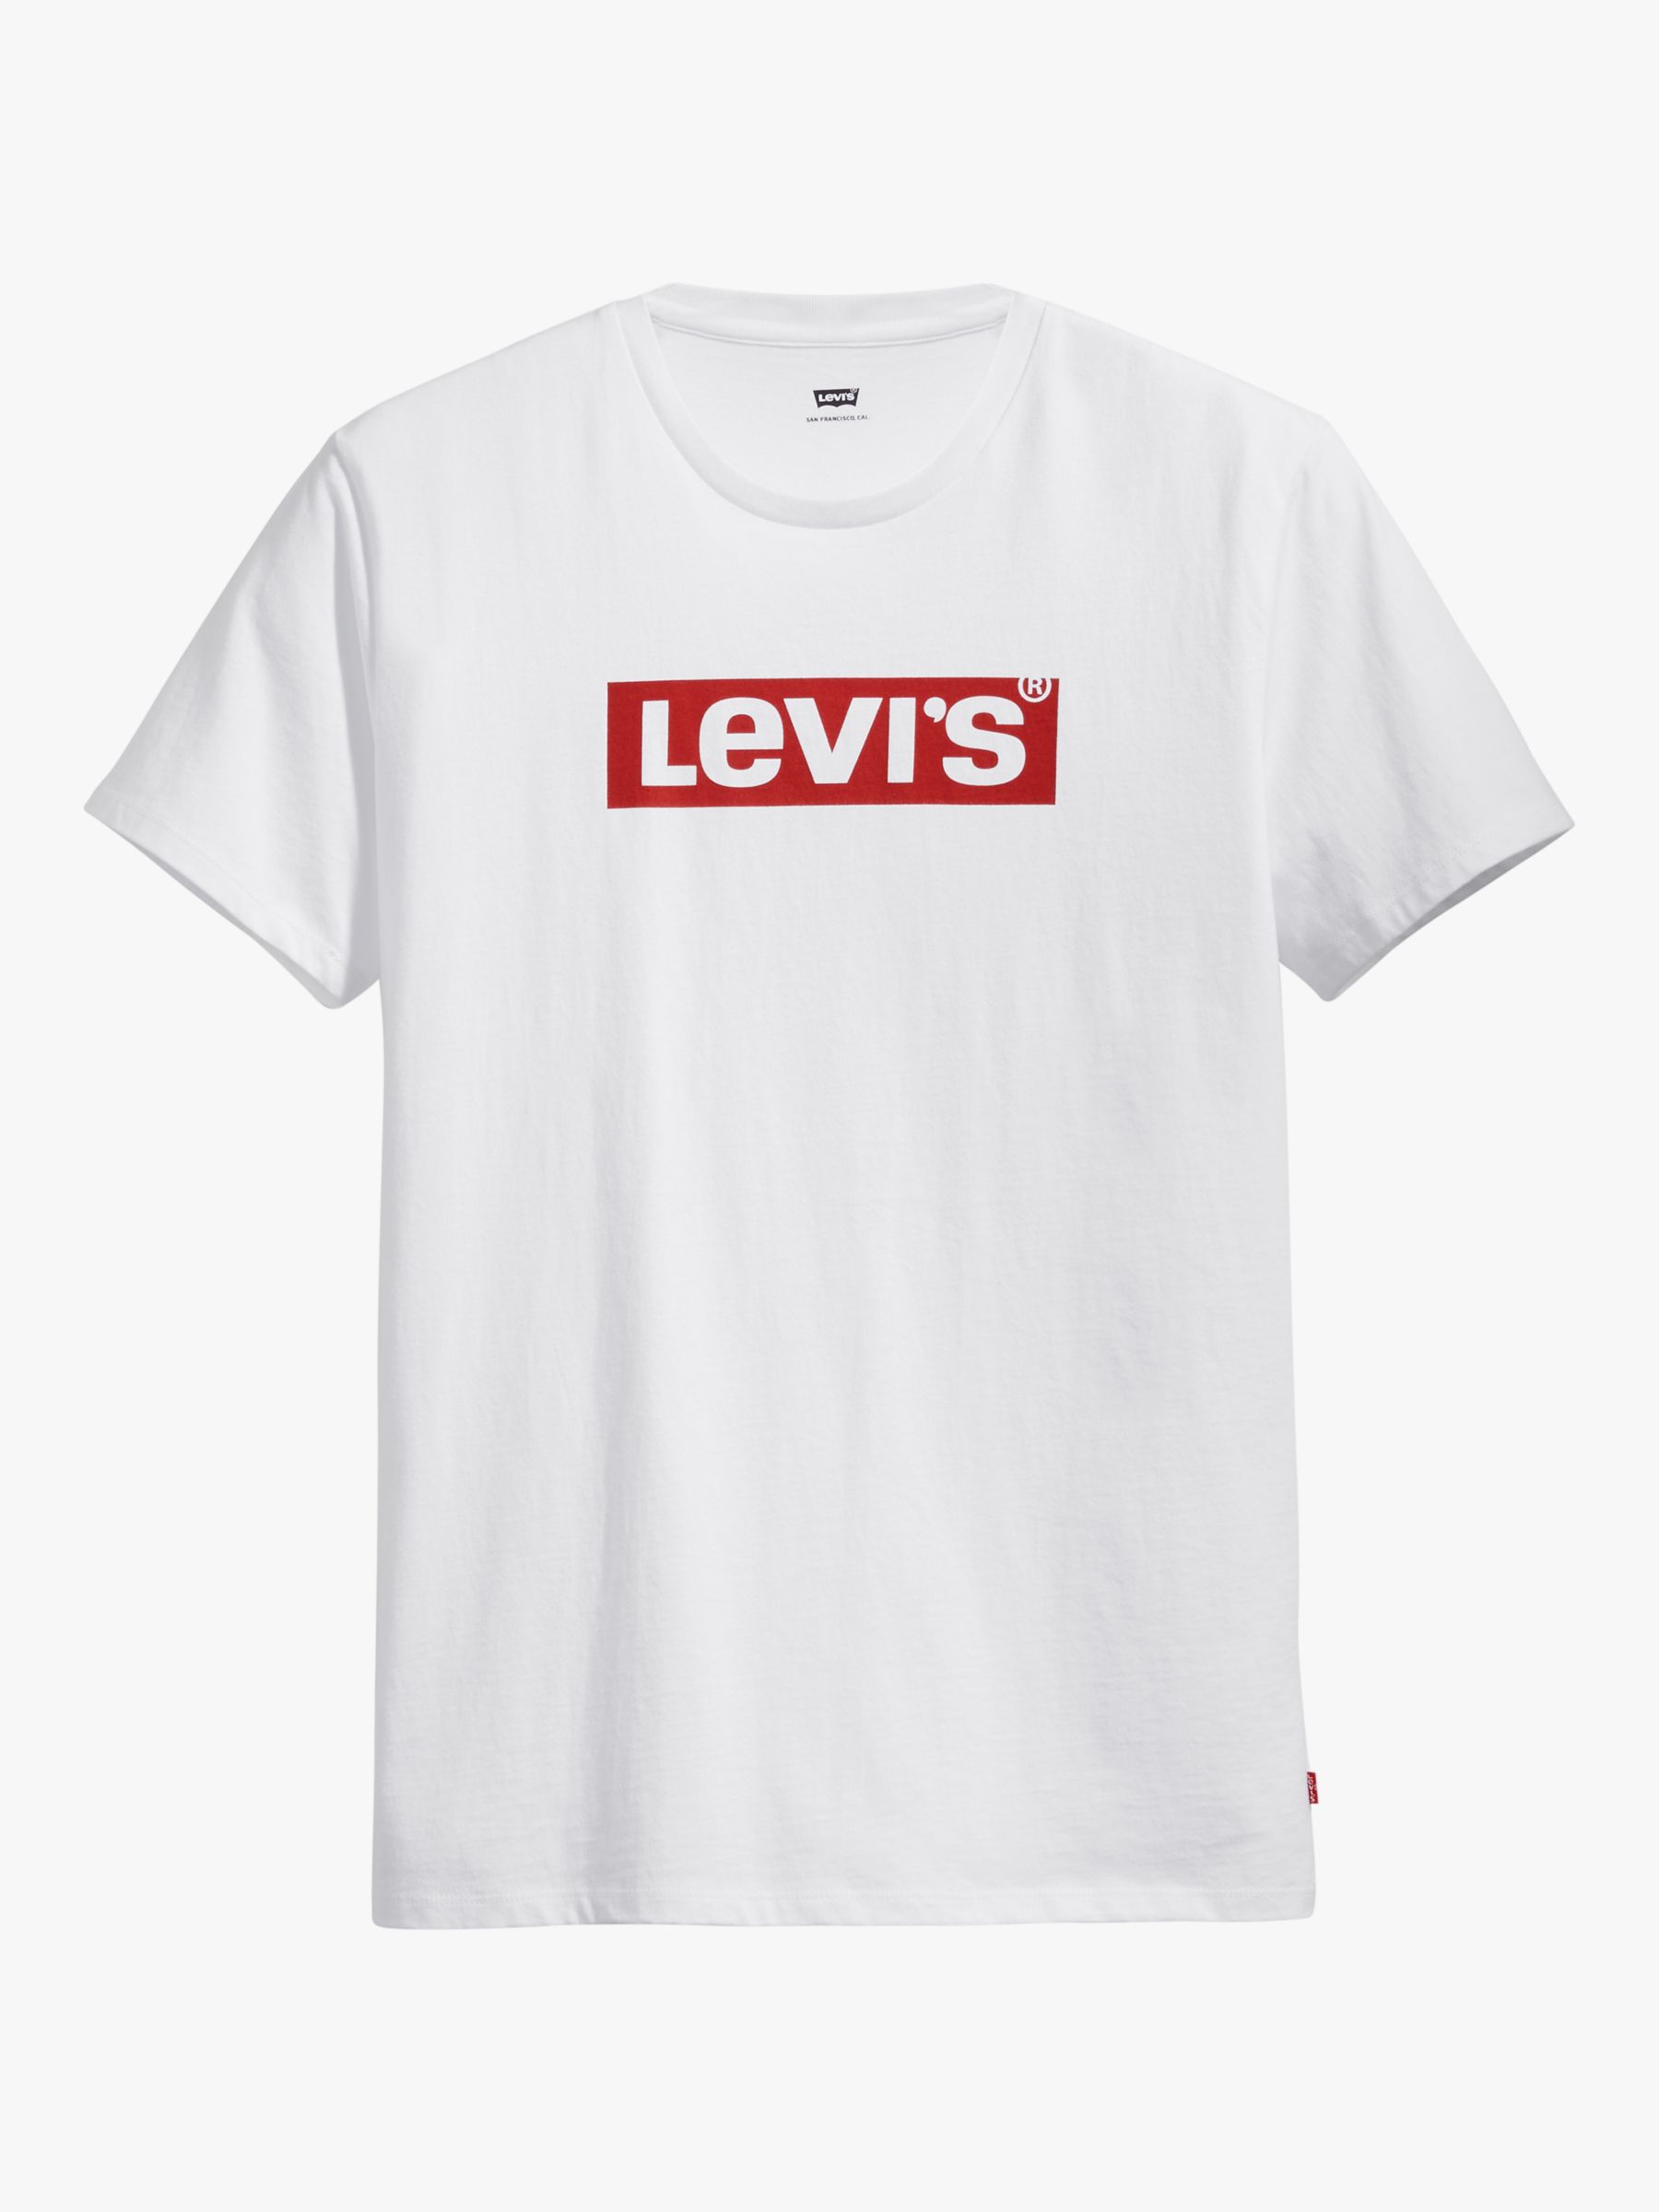 Levi's Short Sleeve Graphic T-Shirt, White